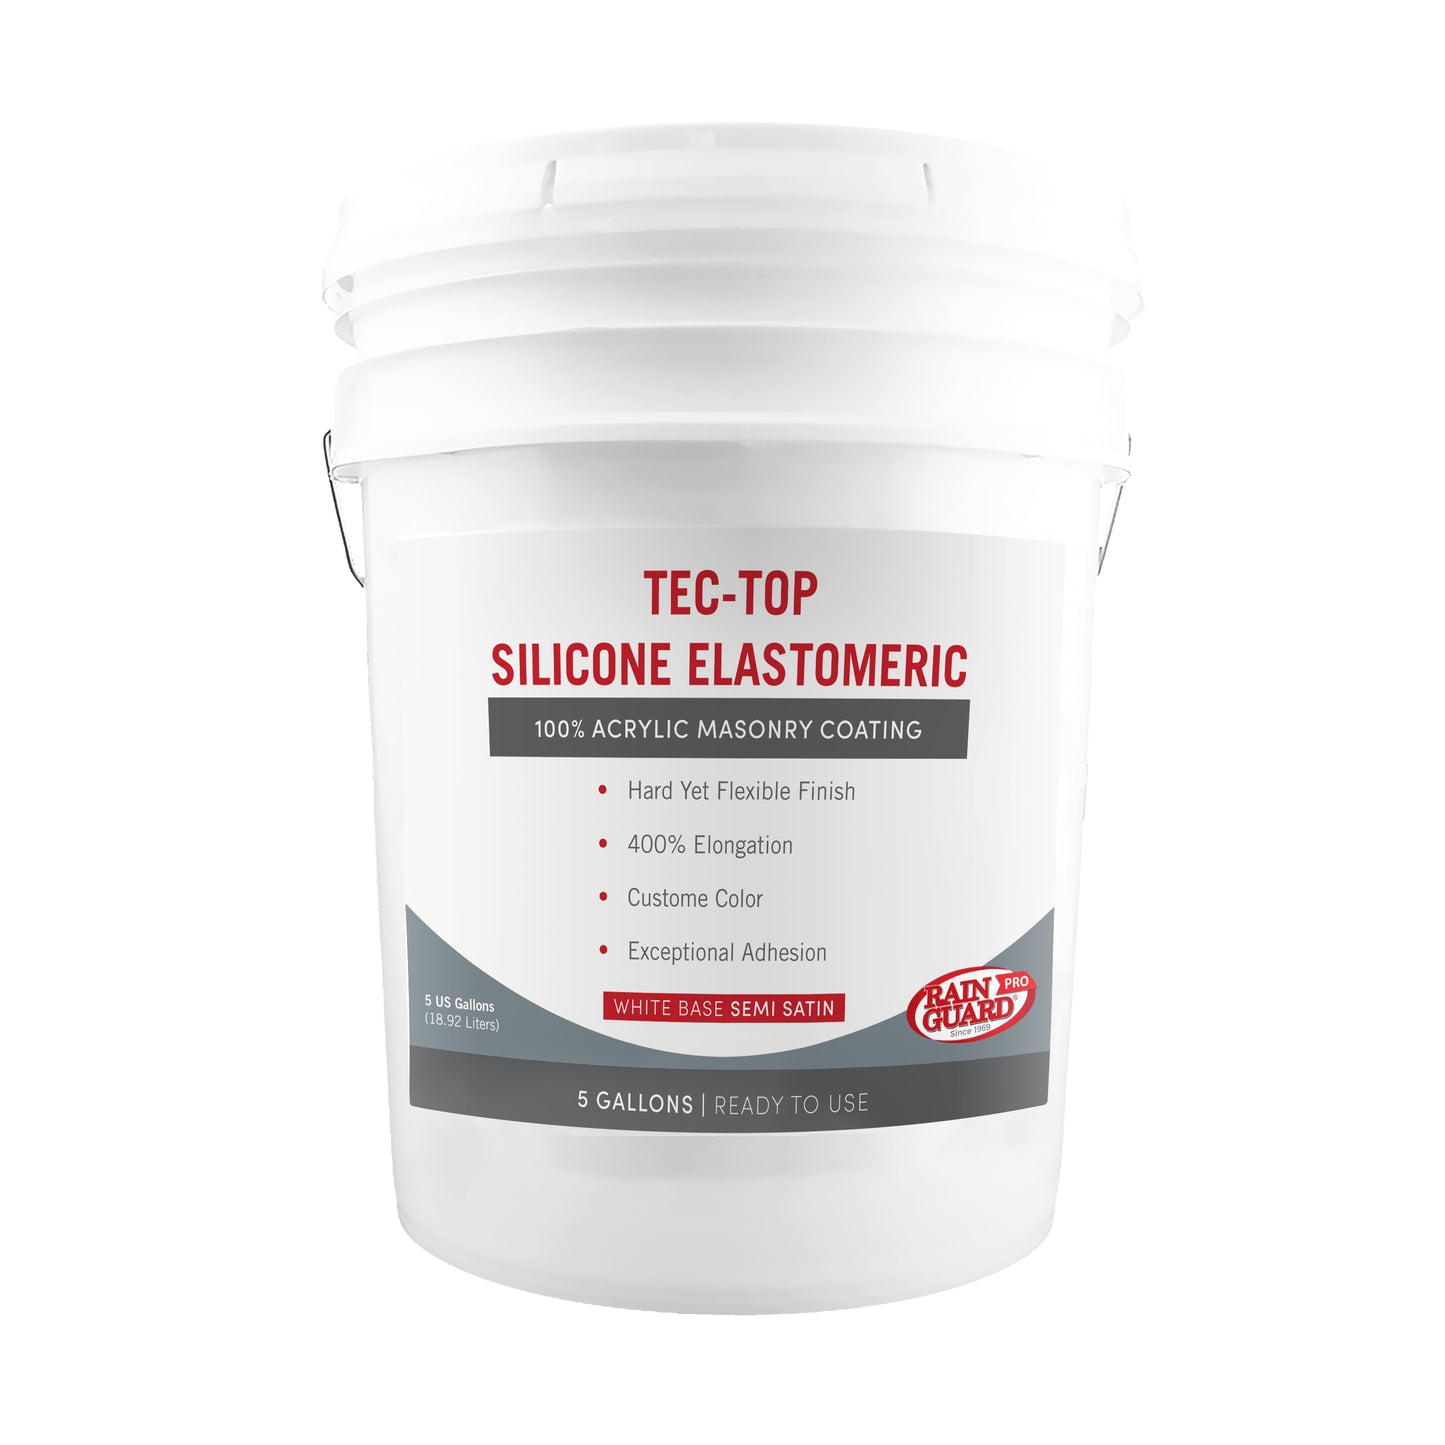 Tec-Top Silicone Elastomeric